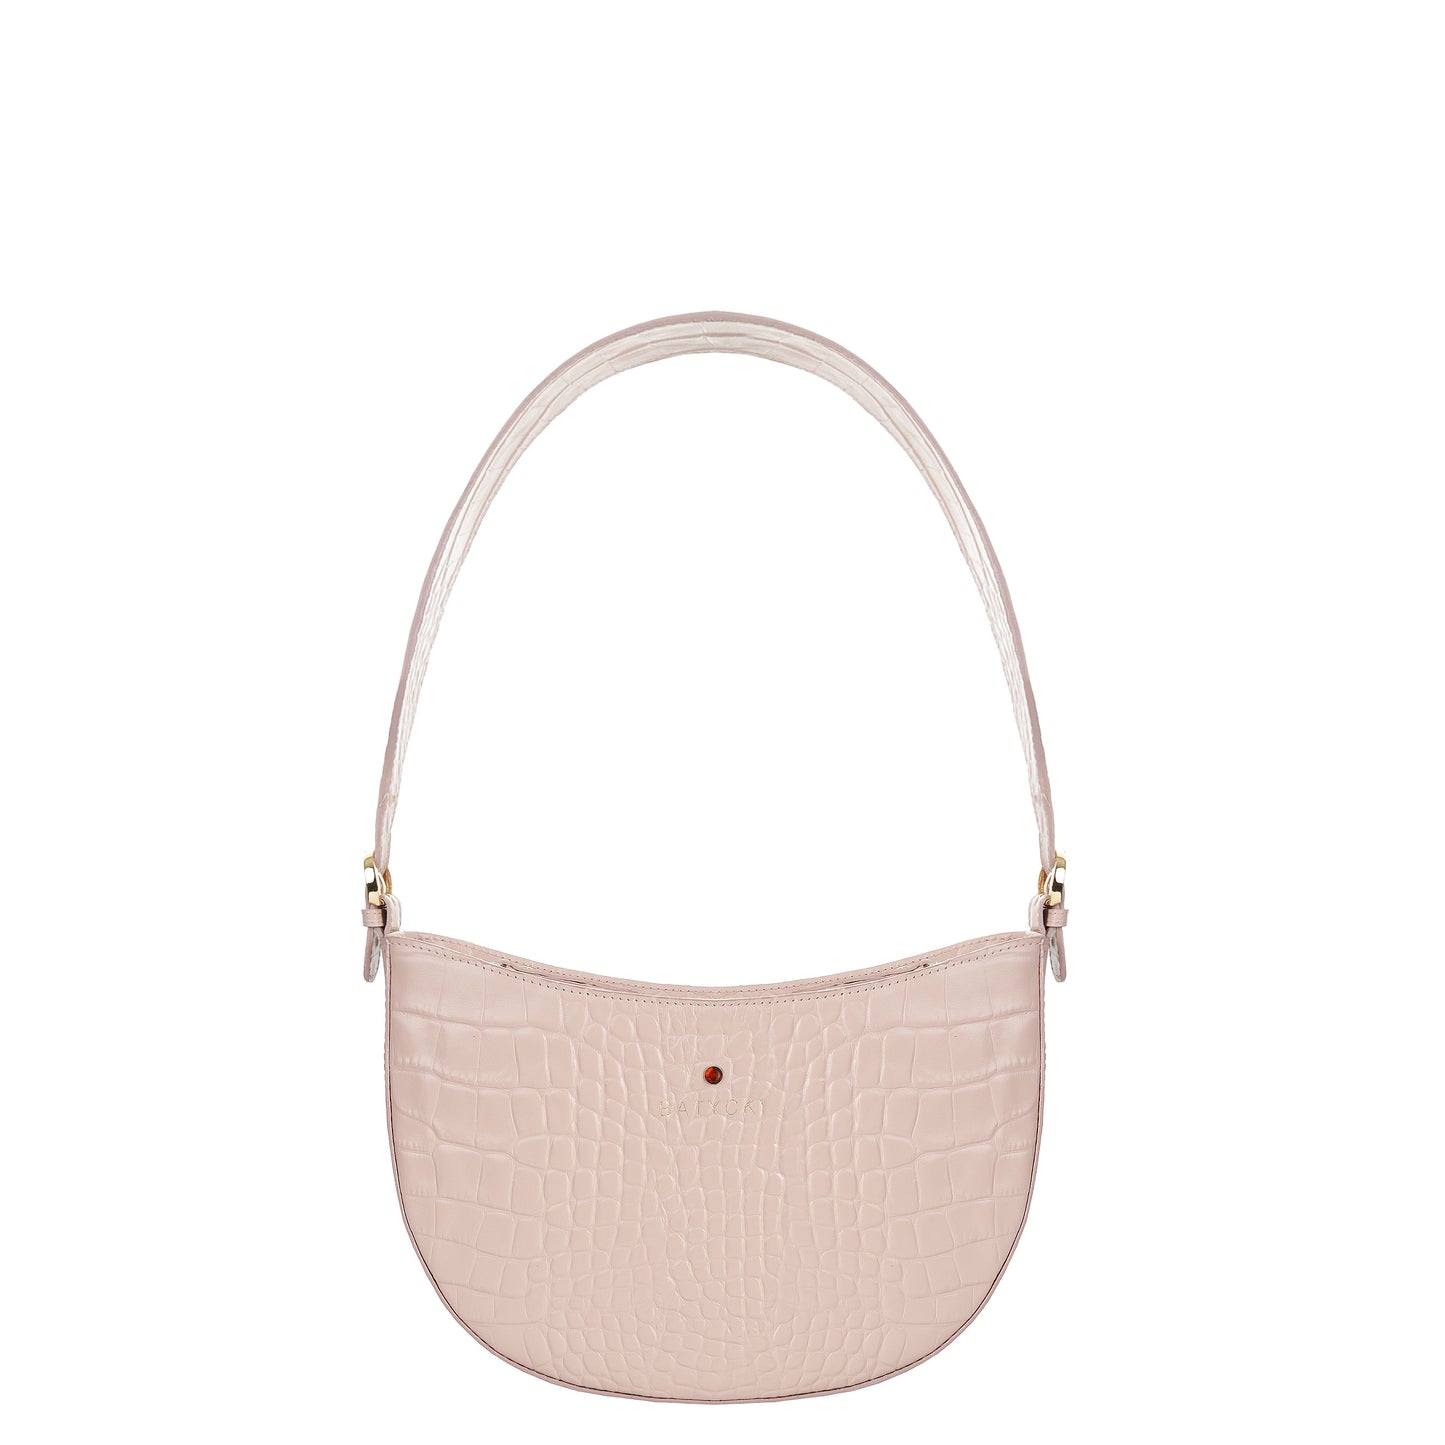 MOON croco powder pink women's leather handbag